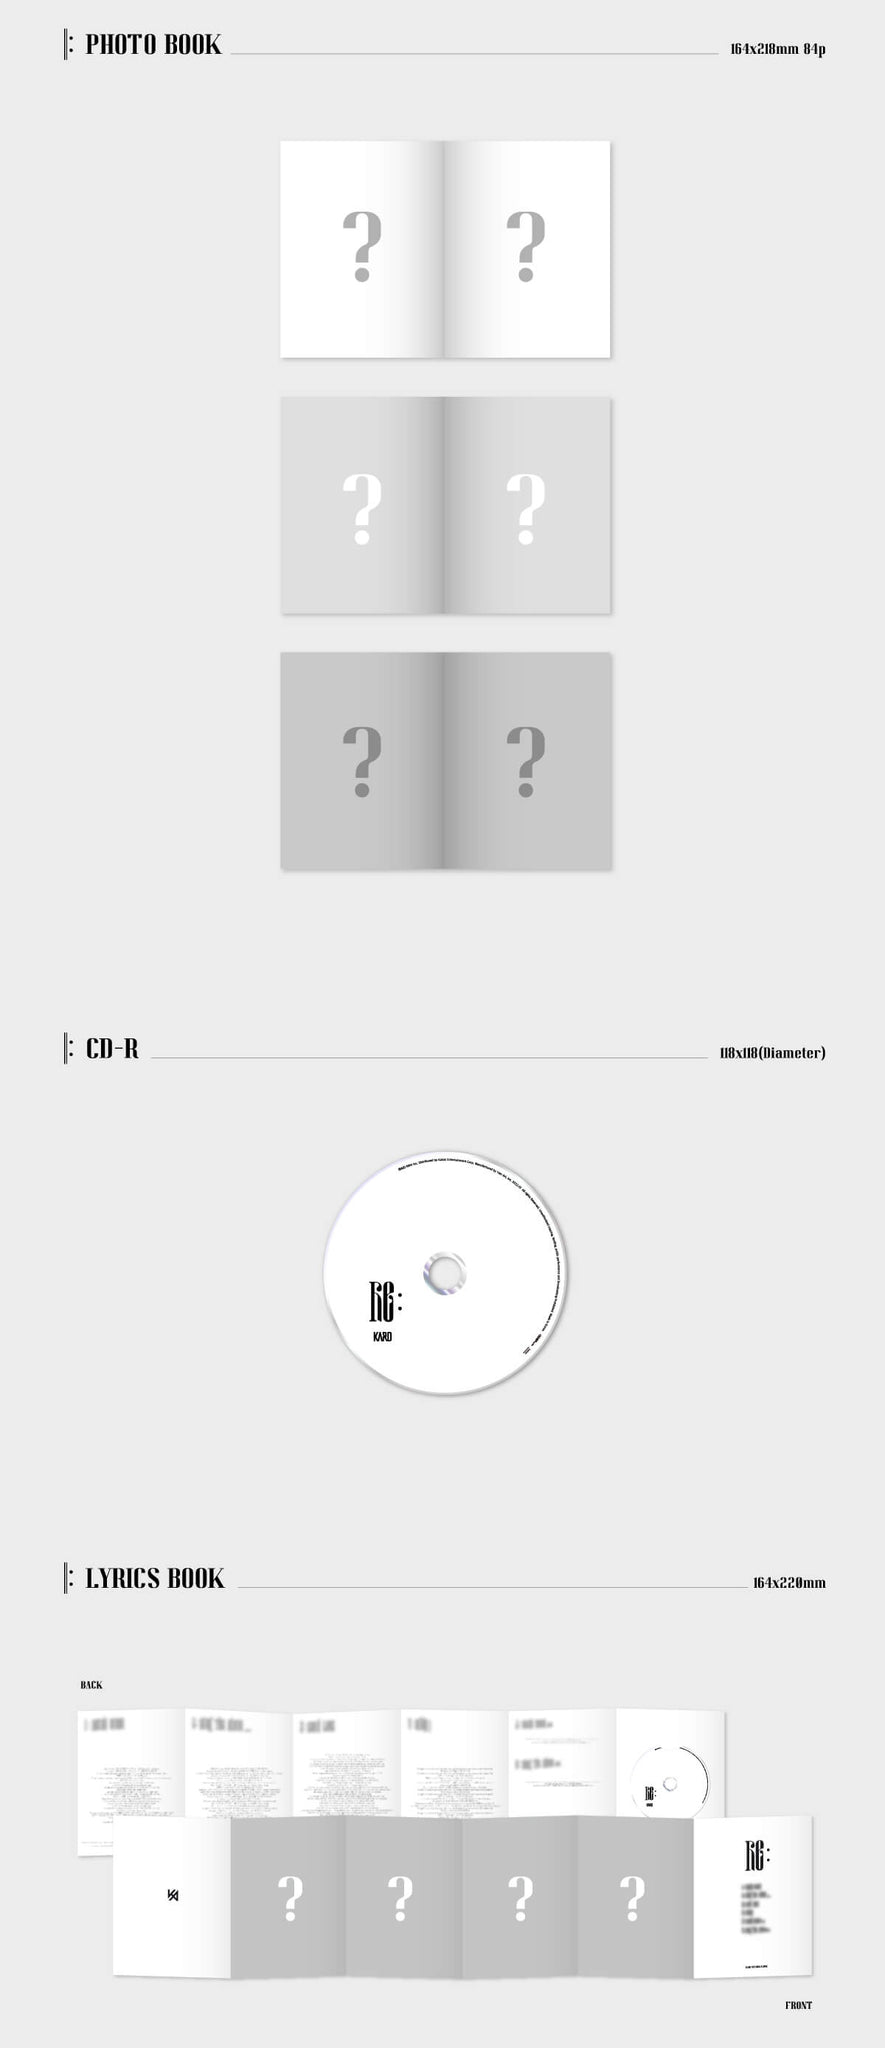 KARD 5th Mini Album Re: Inclusions Photobook CD Lyrics Book